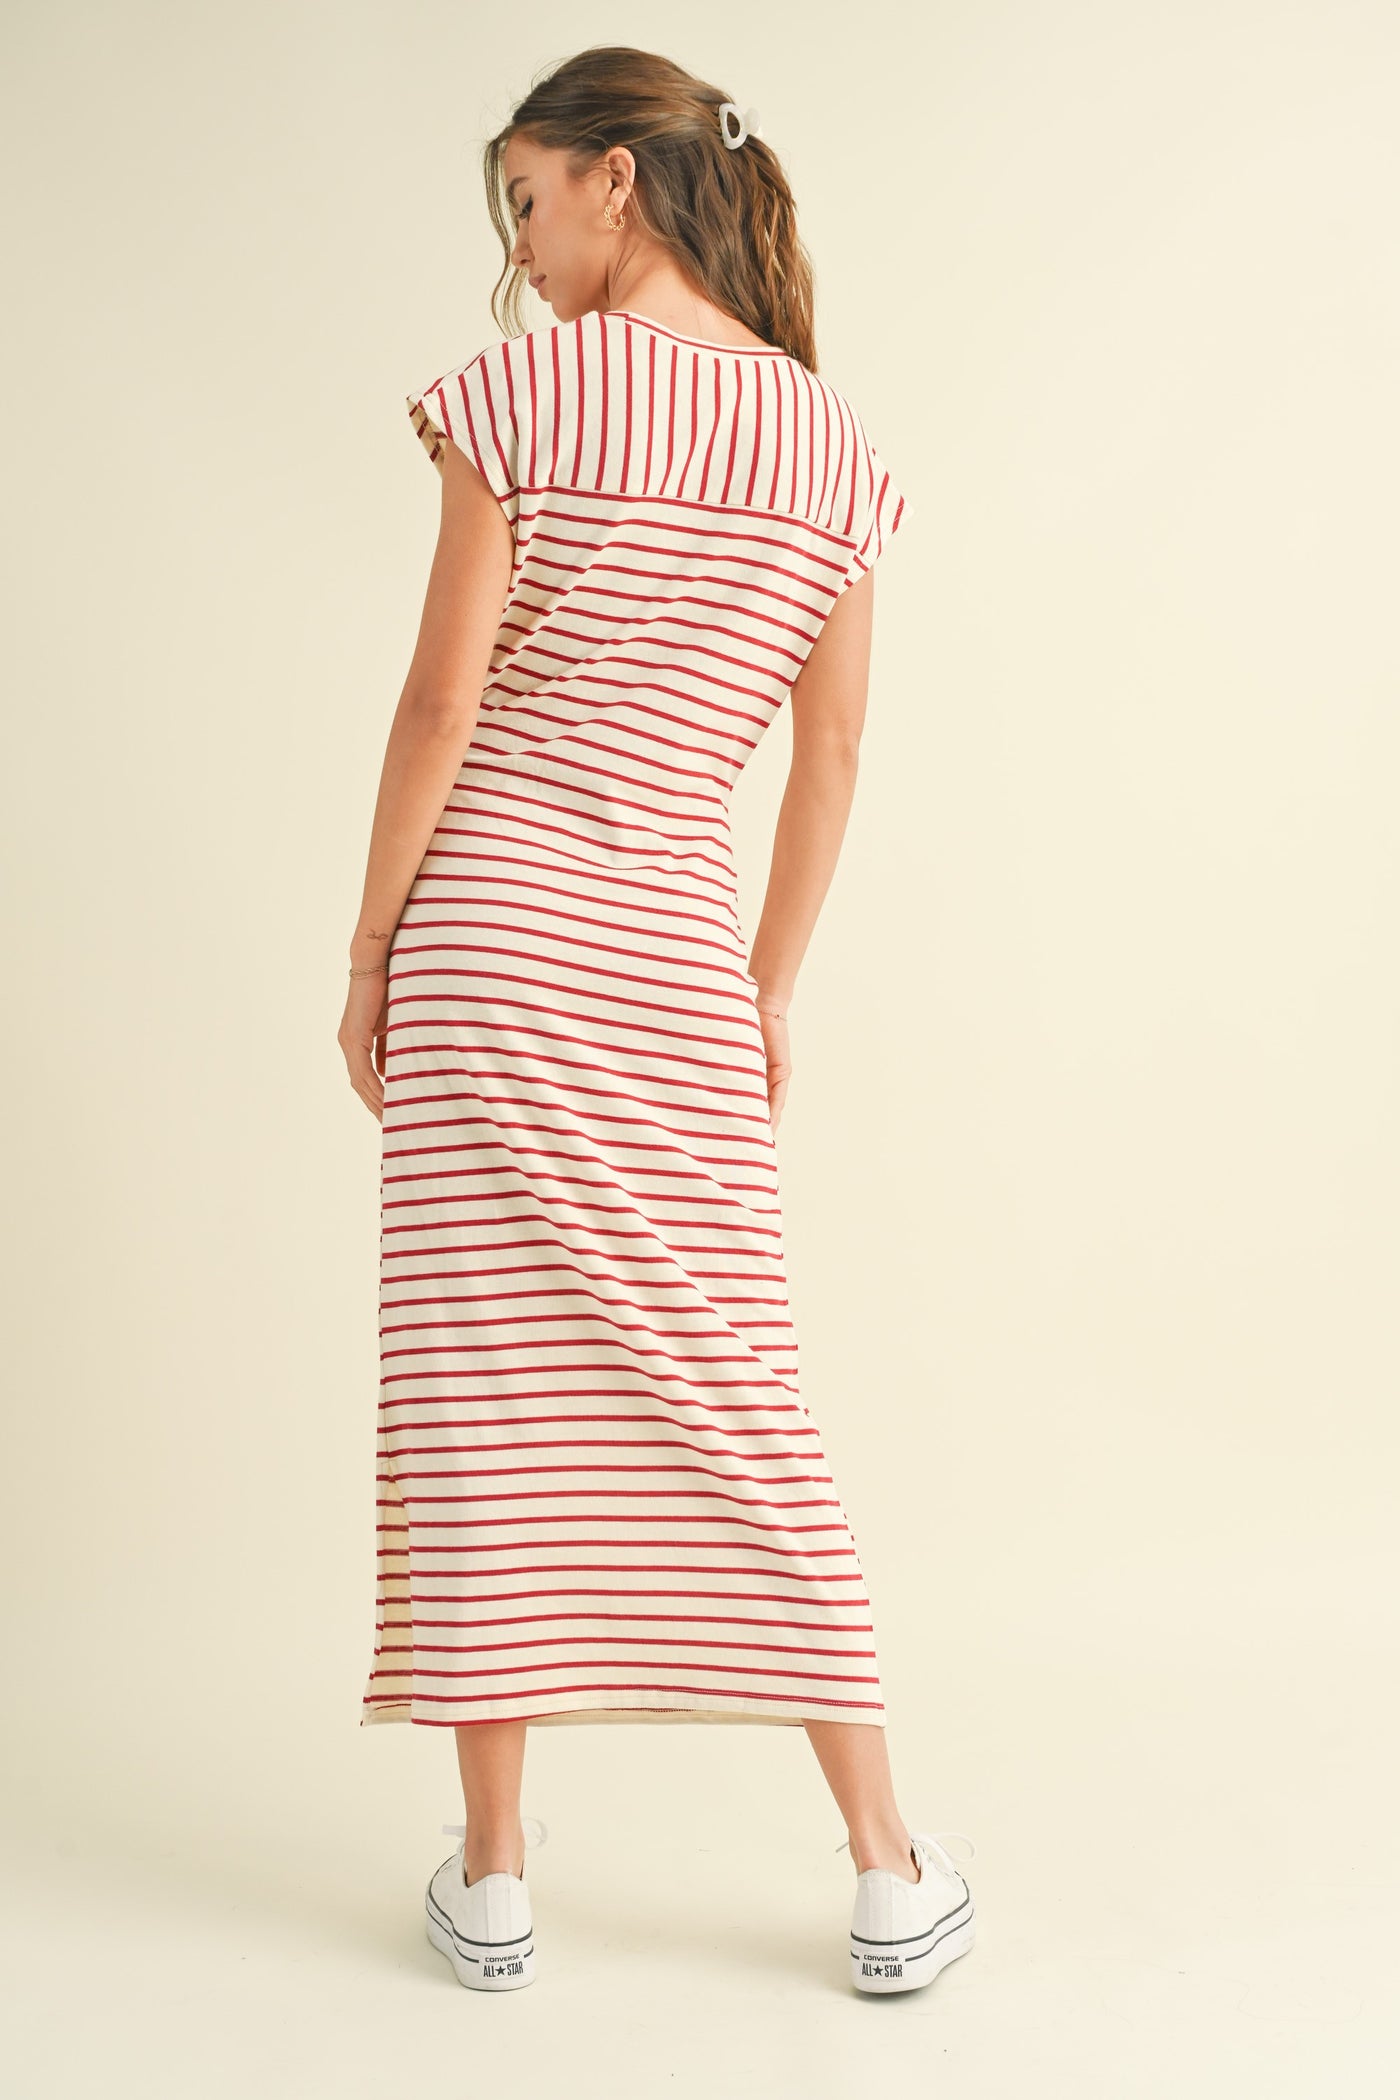 Striped Knot Dress